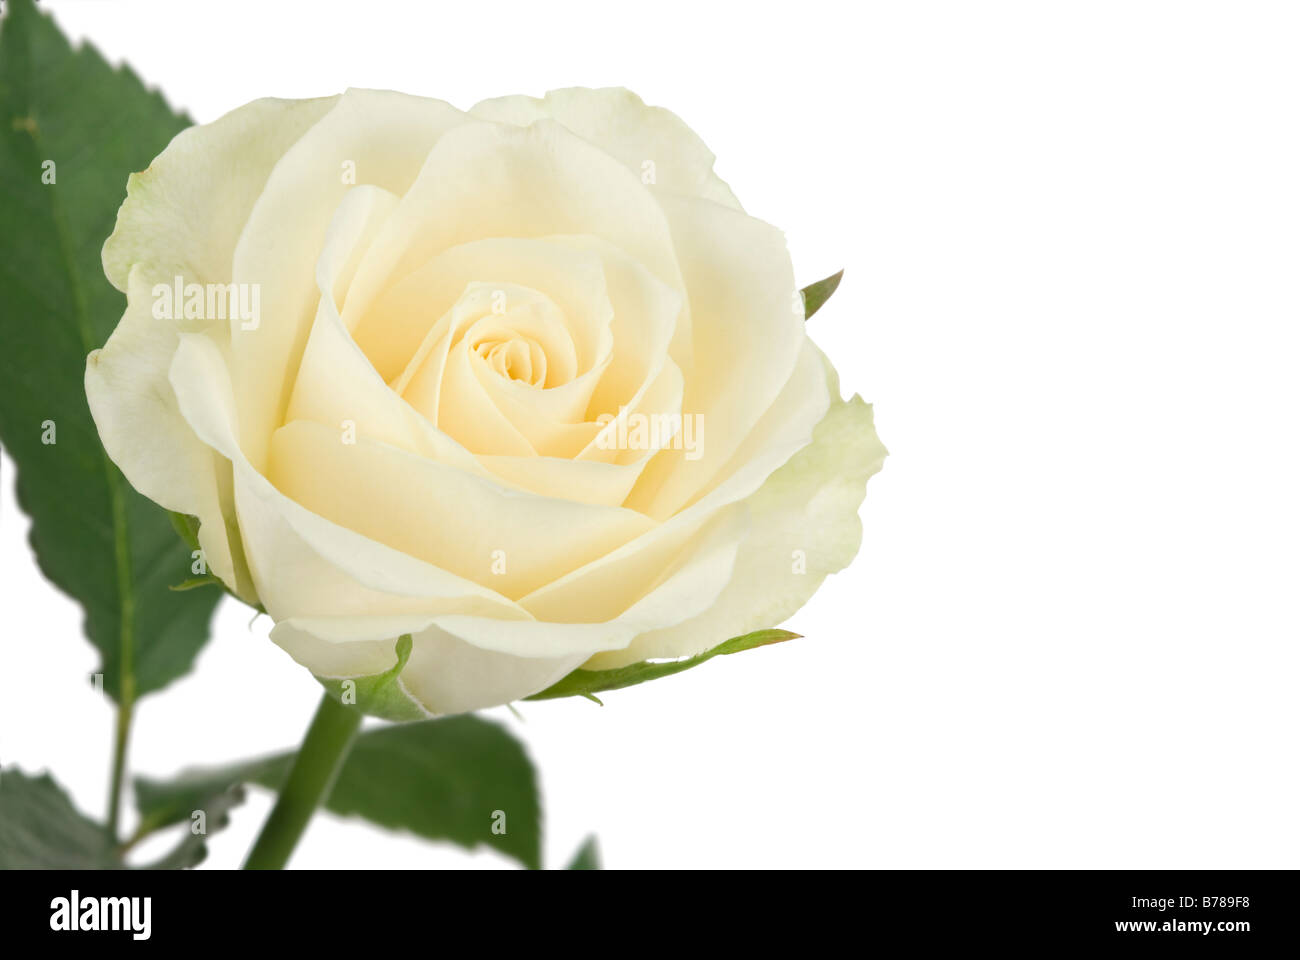 beautiful white rose isolated on a white background Stock Photo